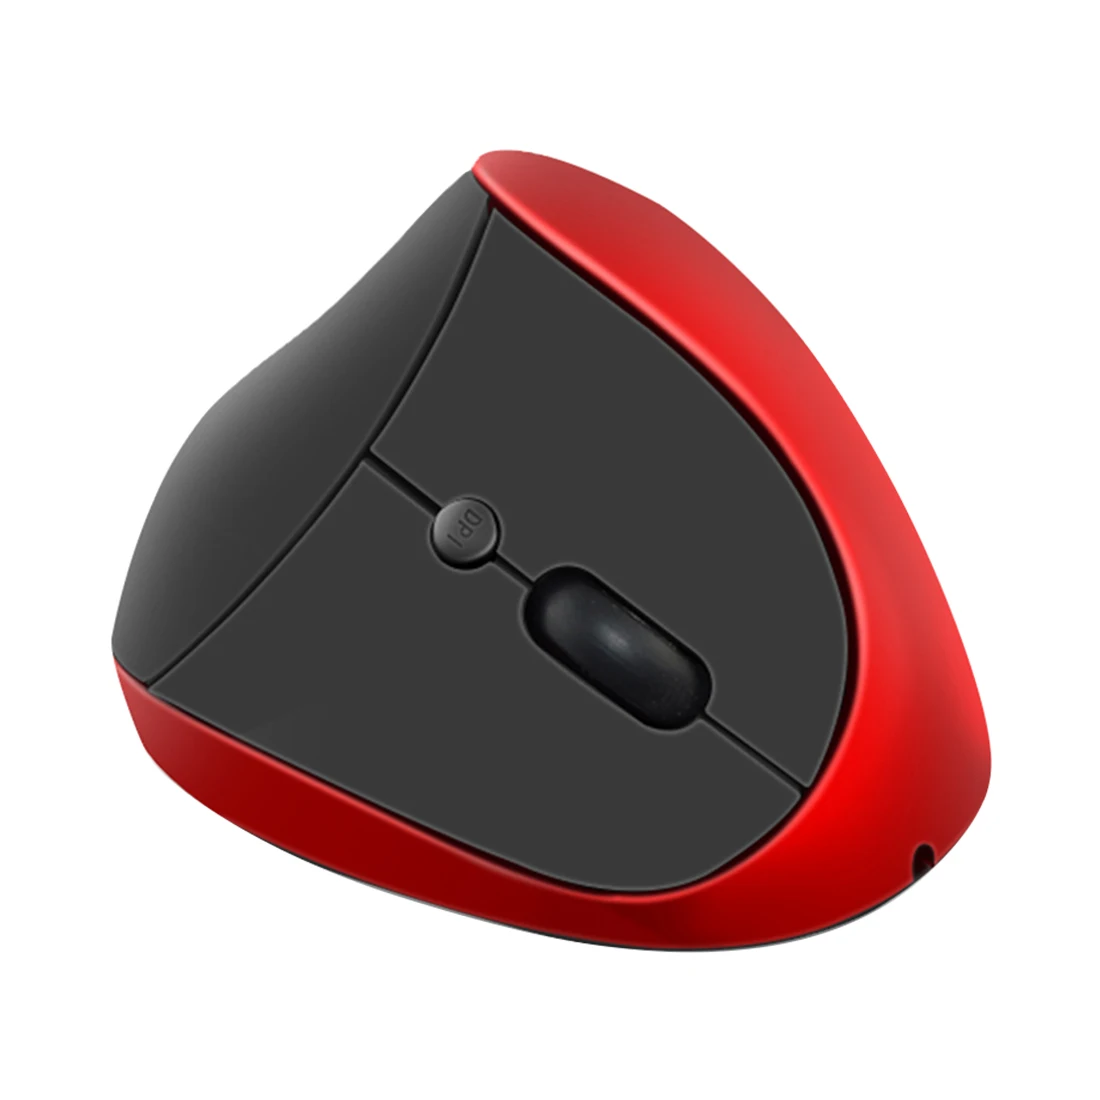 Встроенная мышь ноутбука. Беспроводная мышь dell, dpi2000. Мышь 2е mf2020 WL Black and Red. Мышка для планшета. Мышь вертикальная беспроводная.